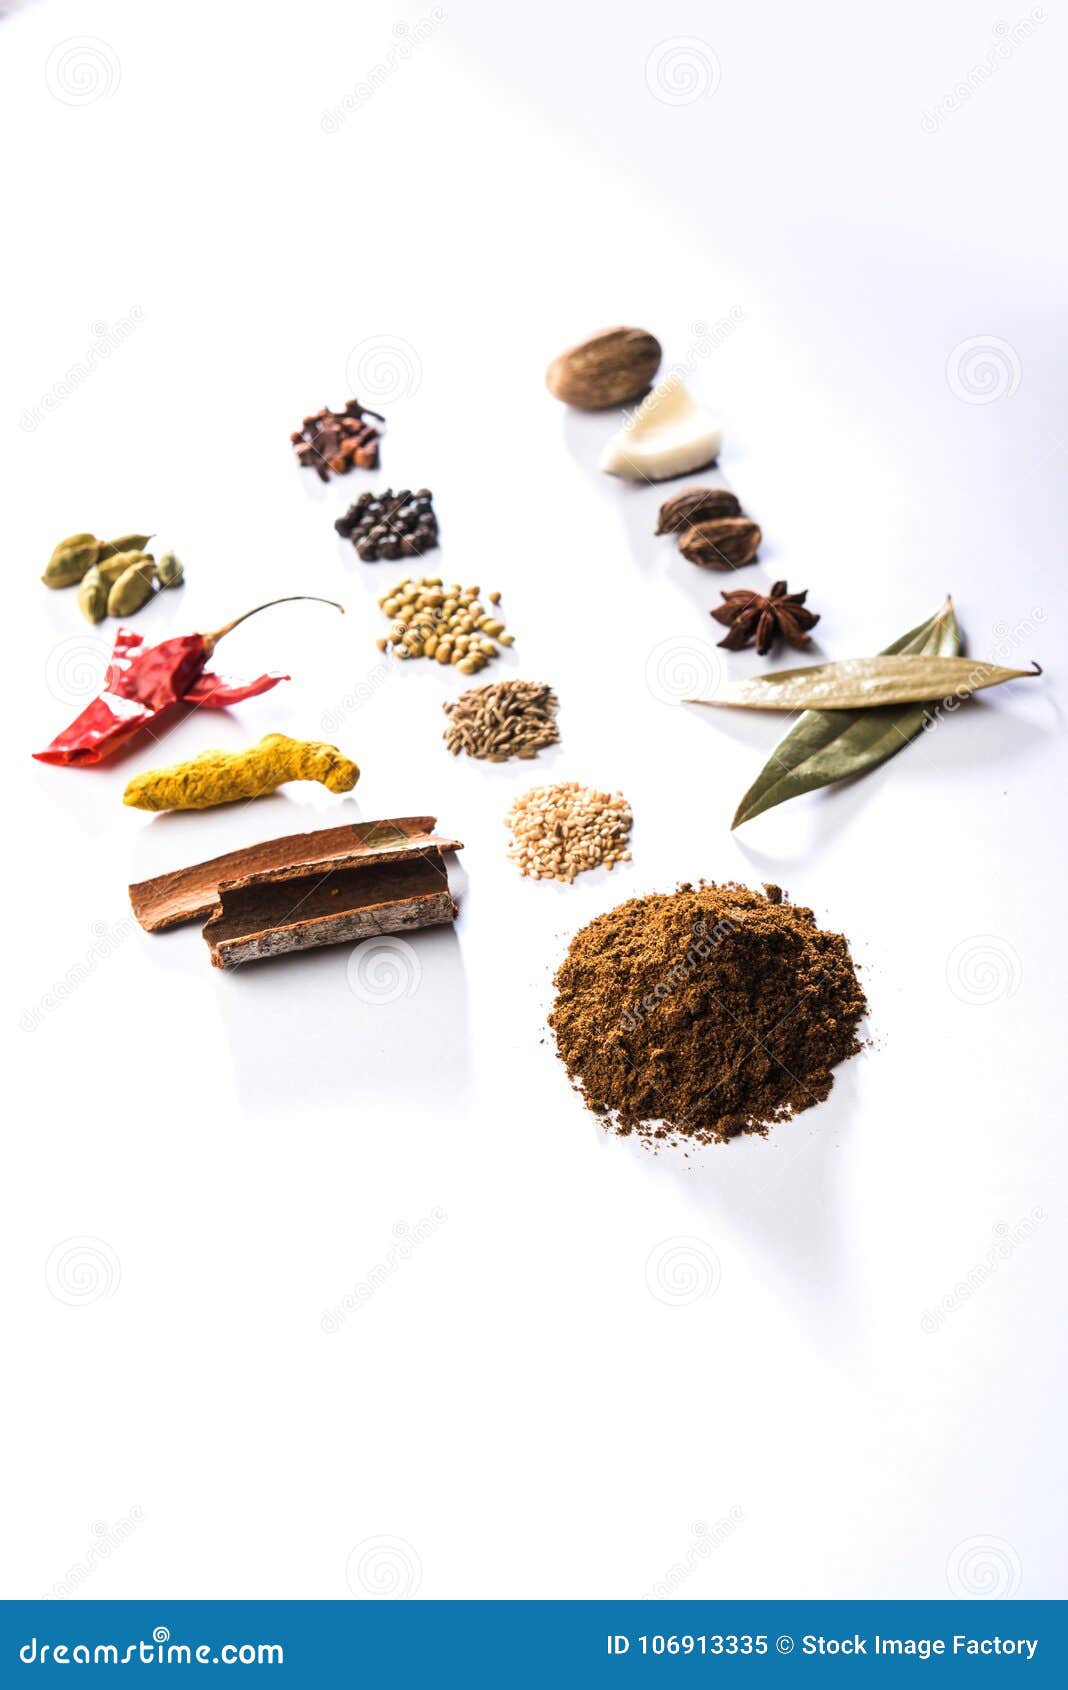 Indian Garam Masala Powder / Indian Spice Mix Stock Image - Image of ...